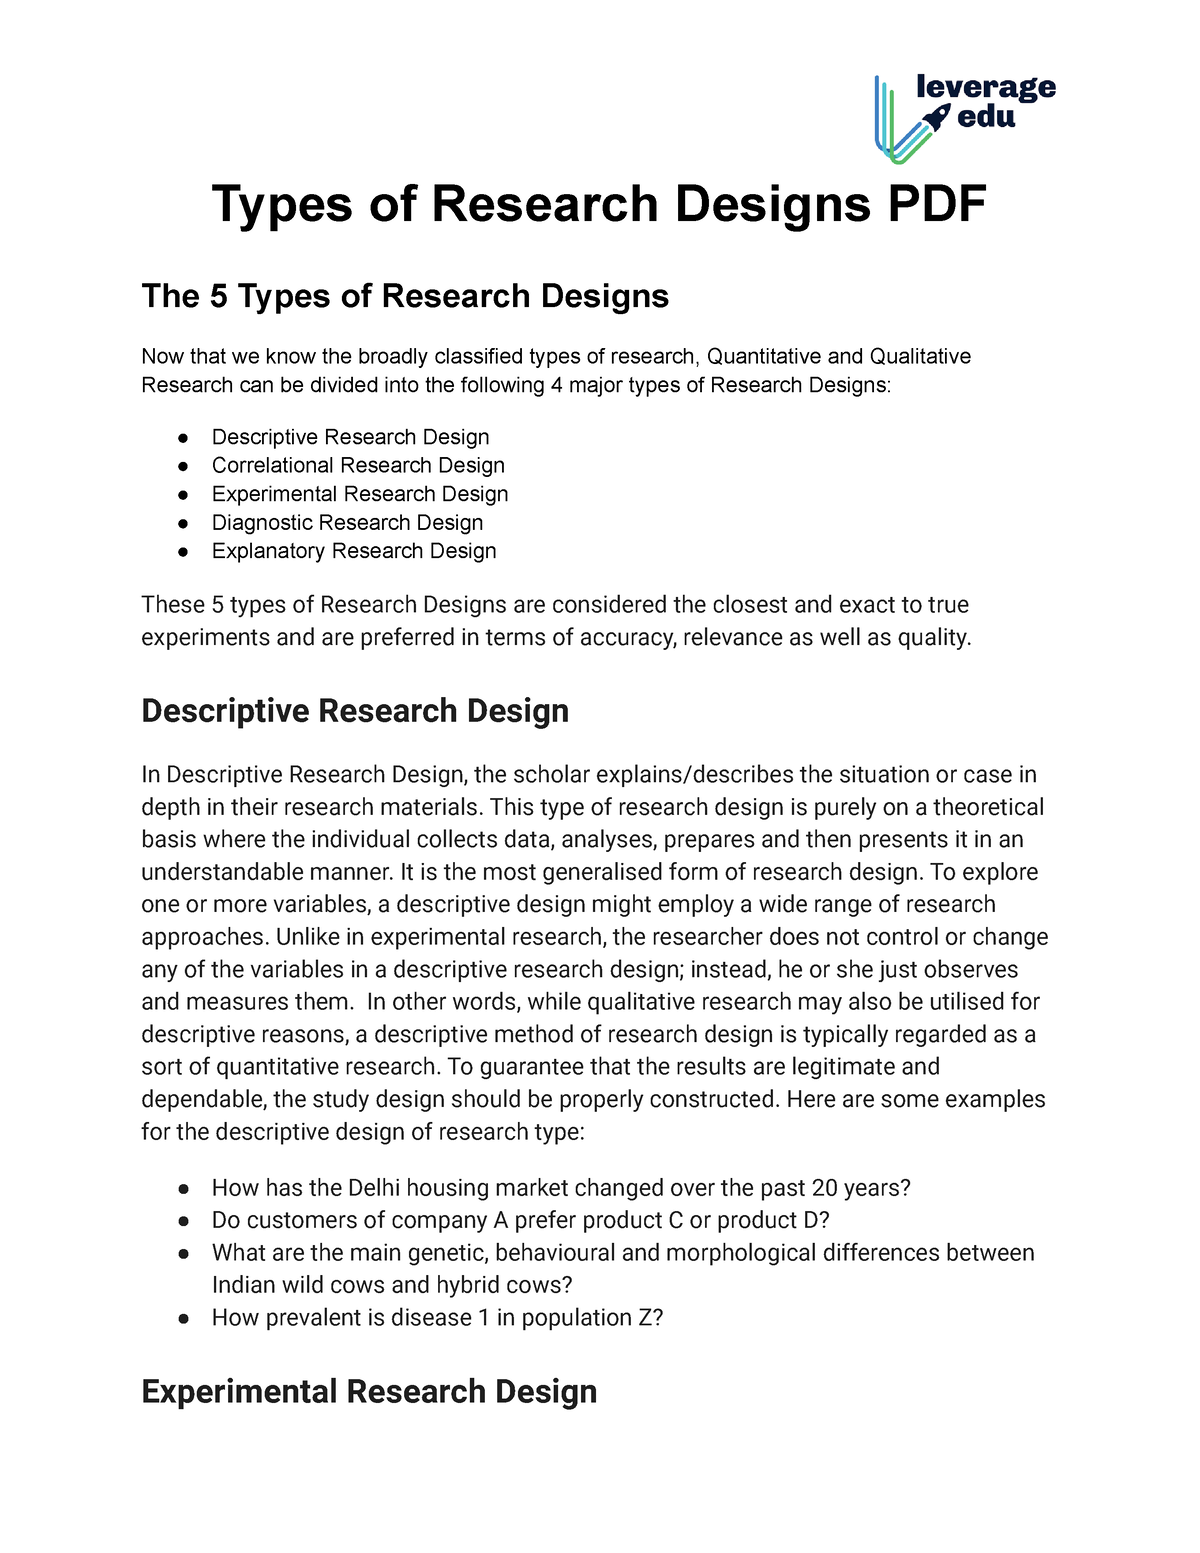 meaning of descriptive research design pdf